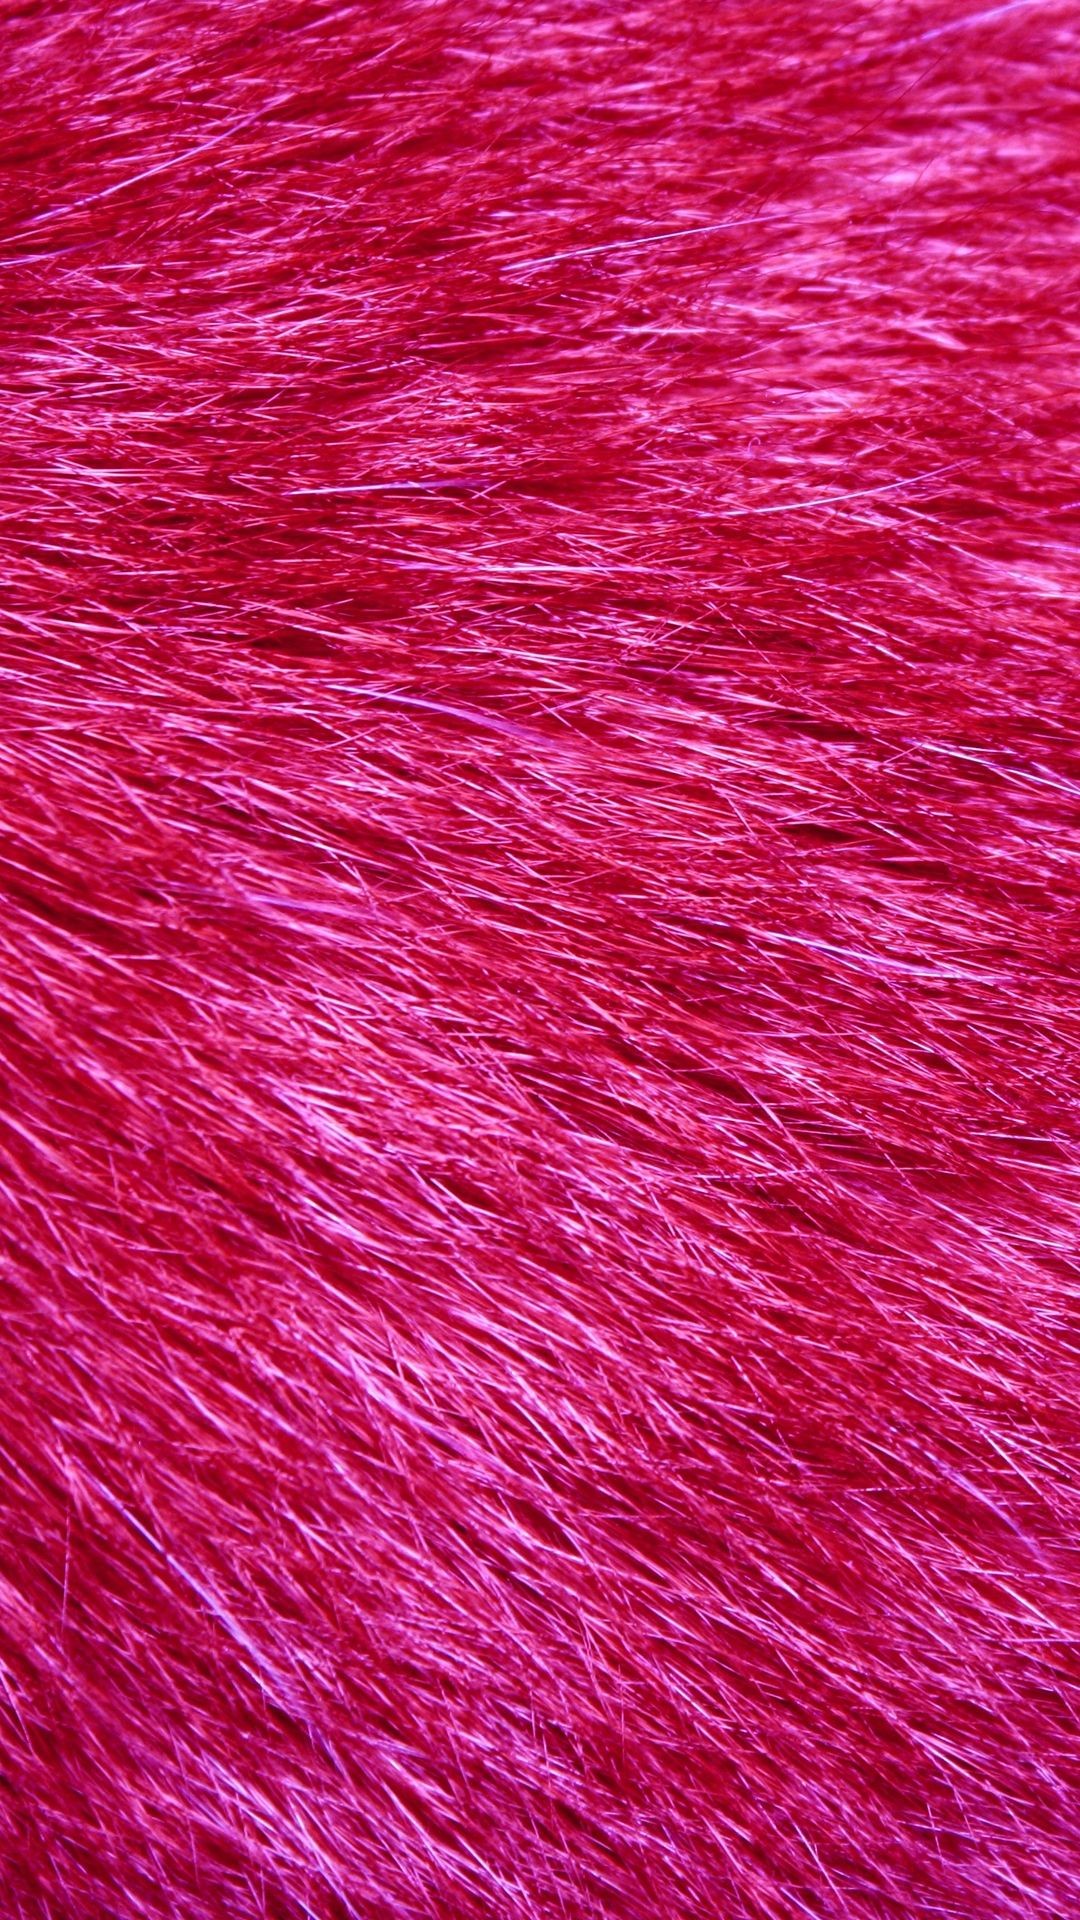 1080x1920, Pink Fluffy - Black Bear Fur